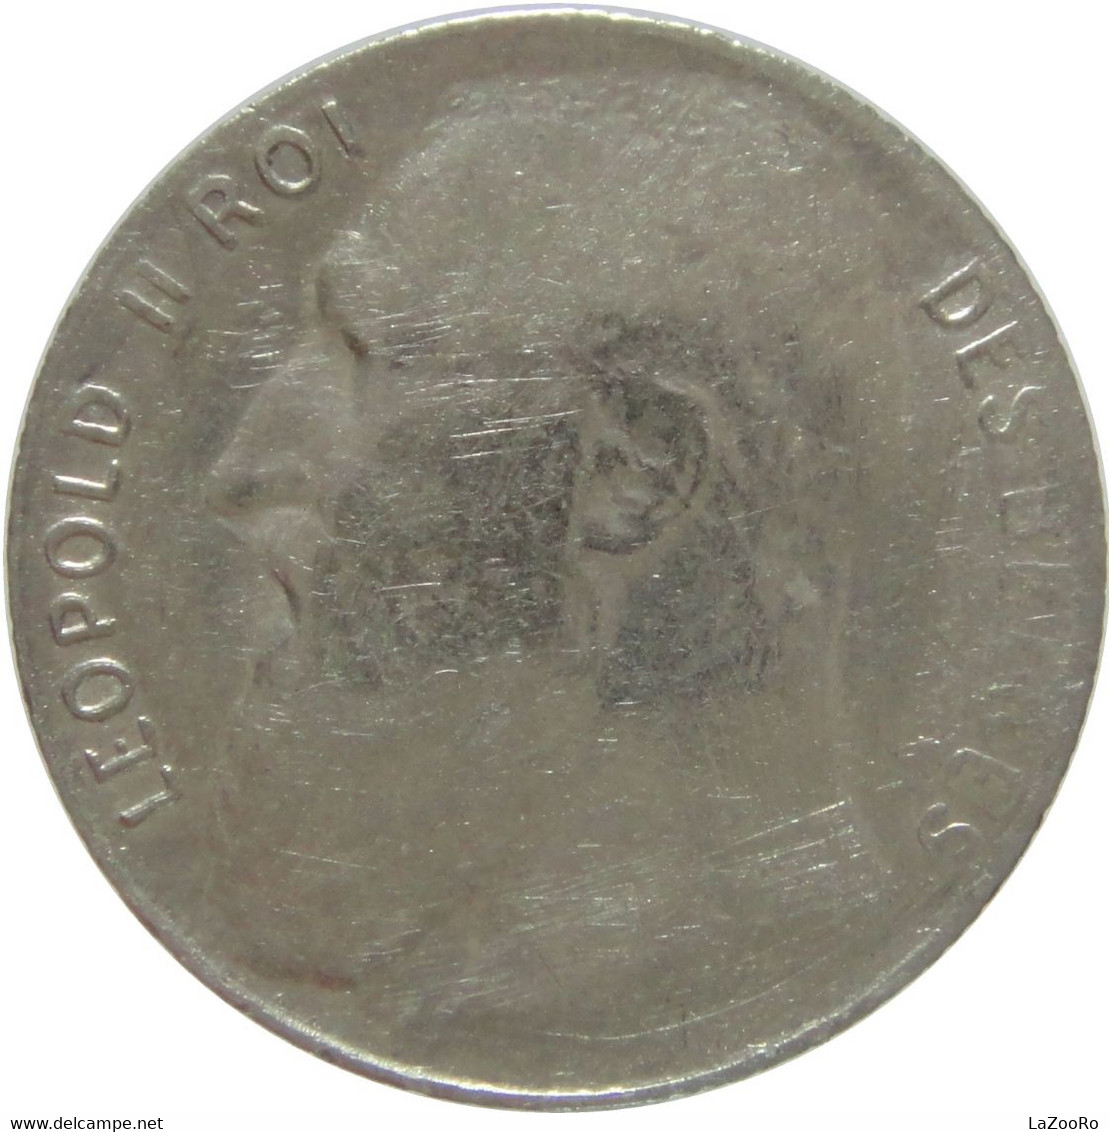 LaZooRo: Belgium 50 Centimes 1901 VF / XF - Silver - 50 Cent